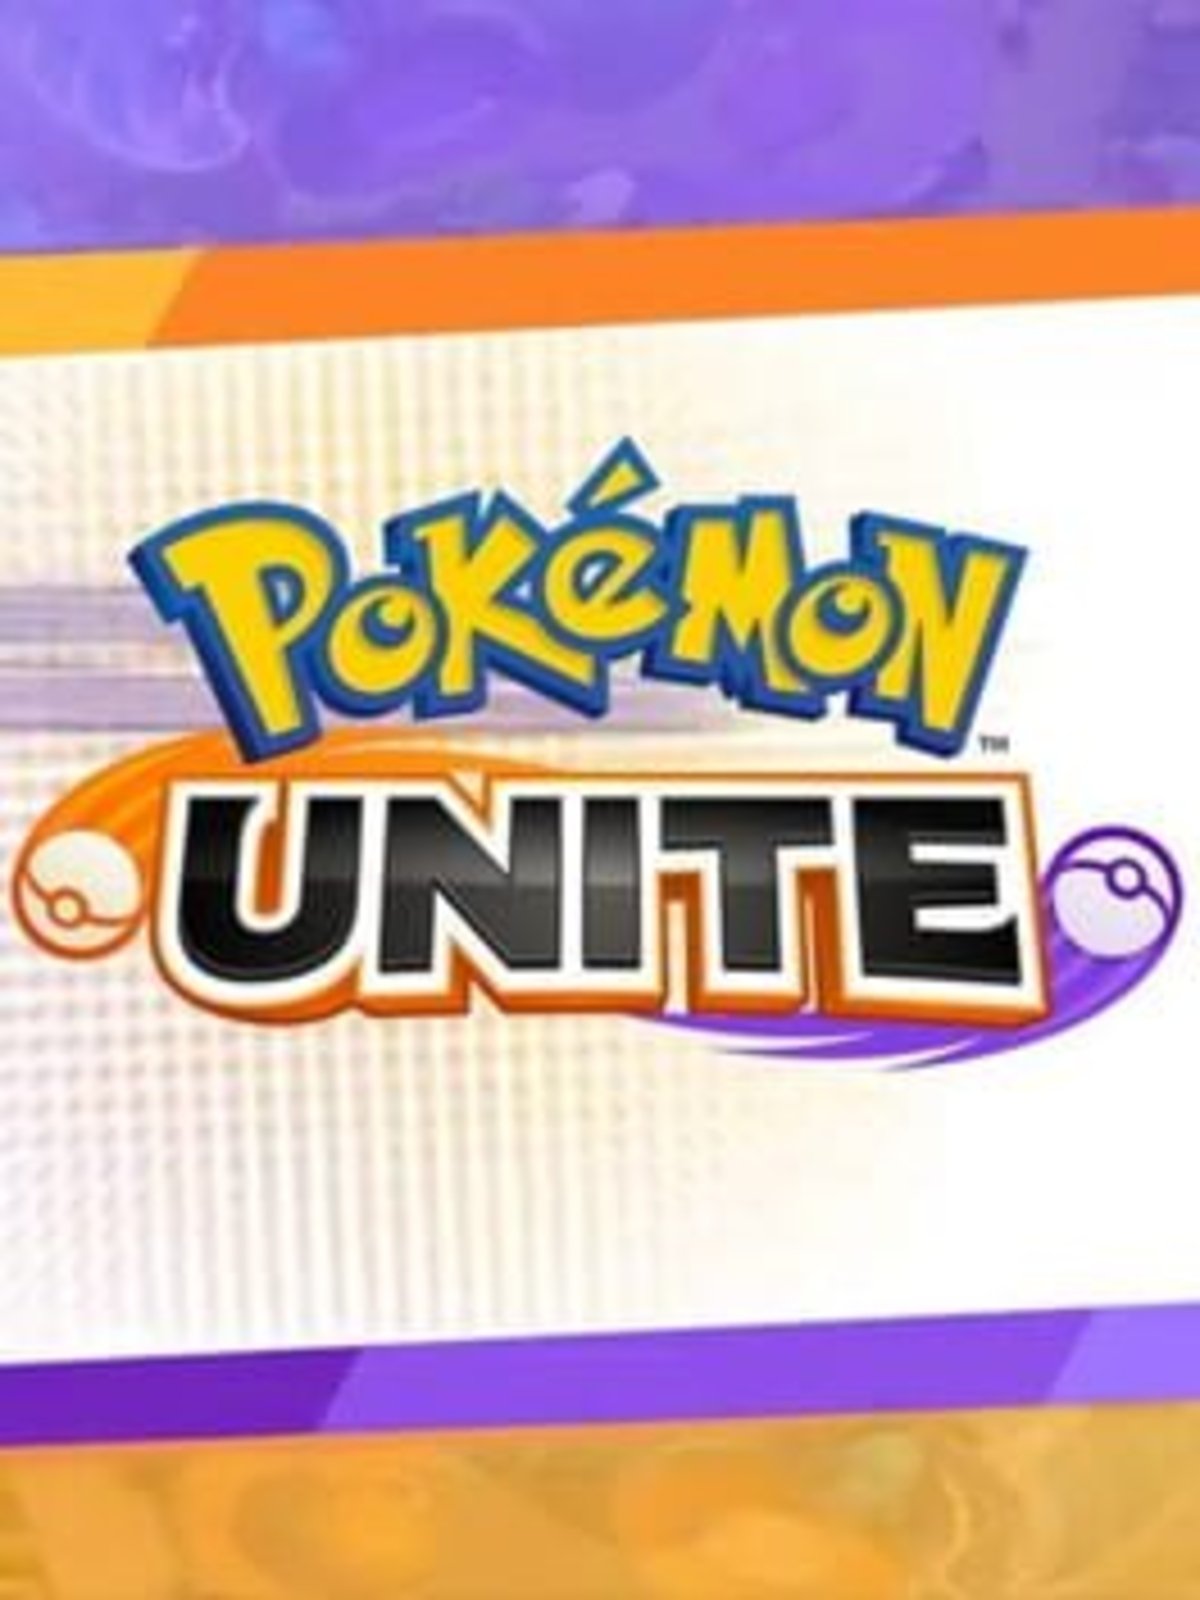 Pokémon Unite nerfs one of the items for Charizard